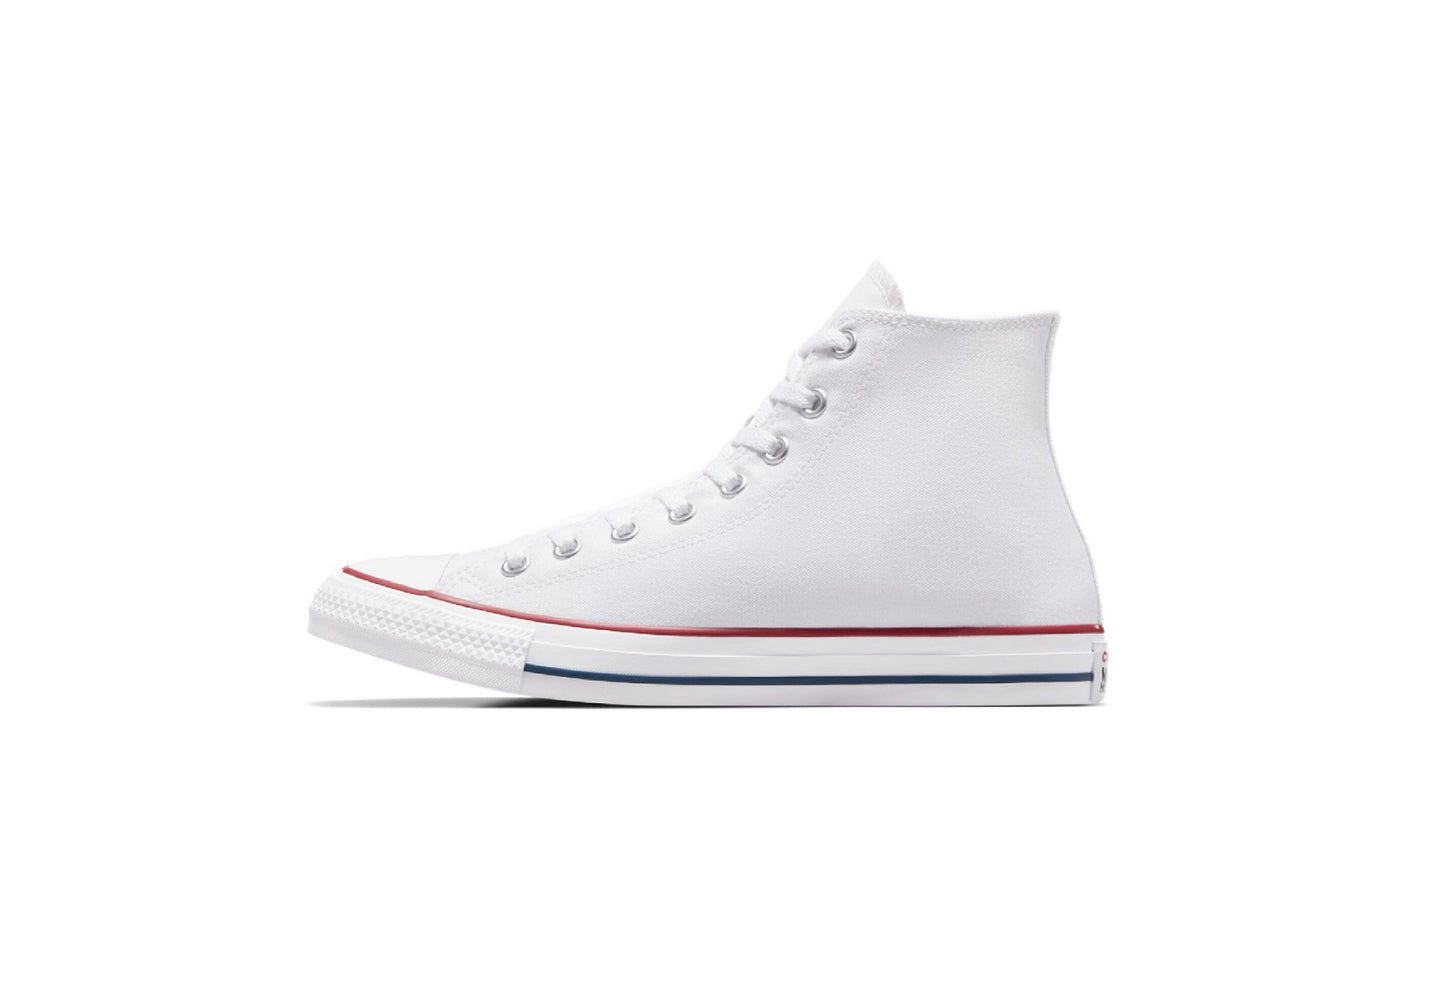 Converse Chuck Taylor All Star High Top Canvas Sneaker, Optical White (Men)